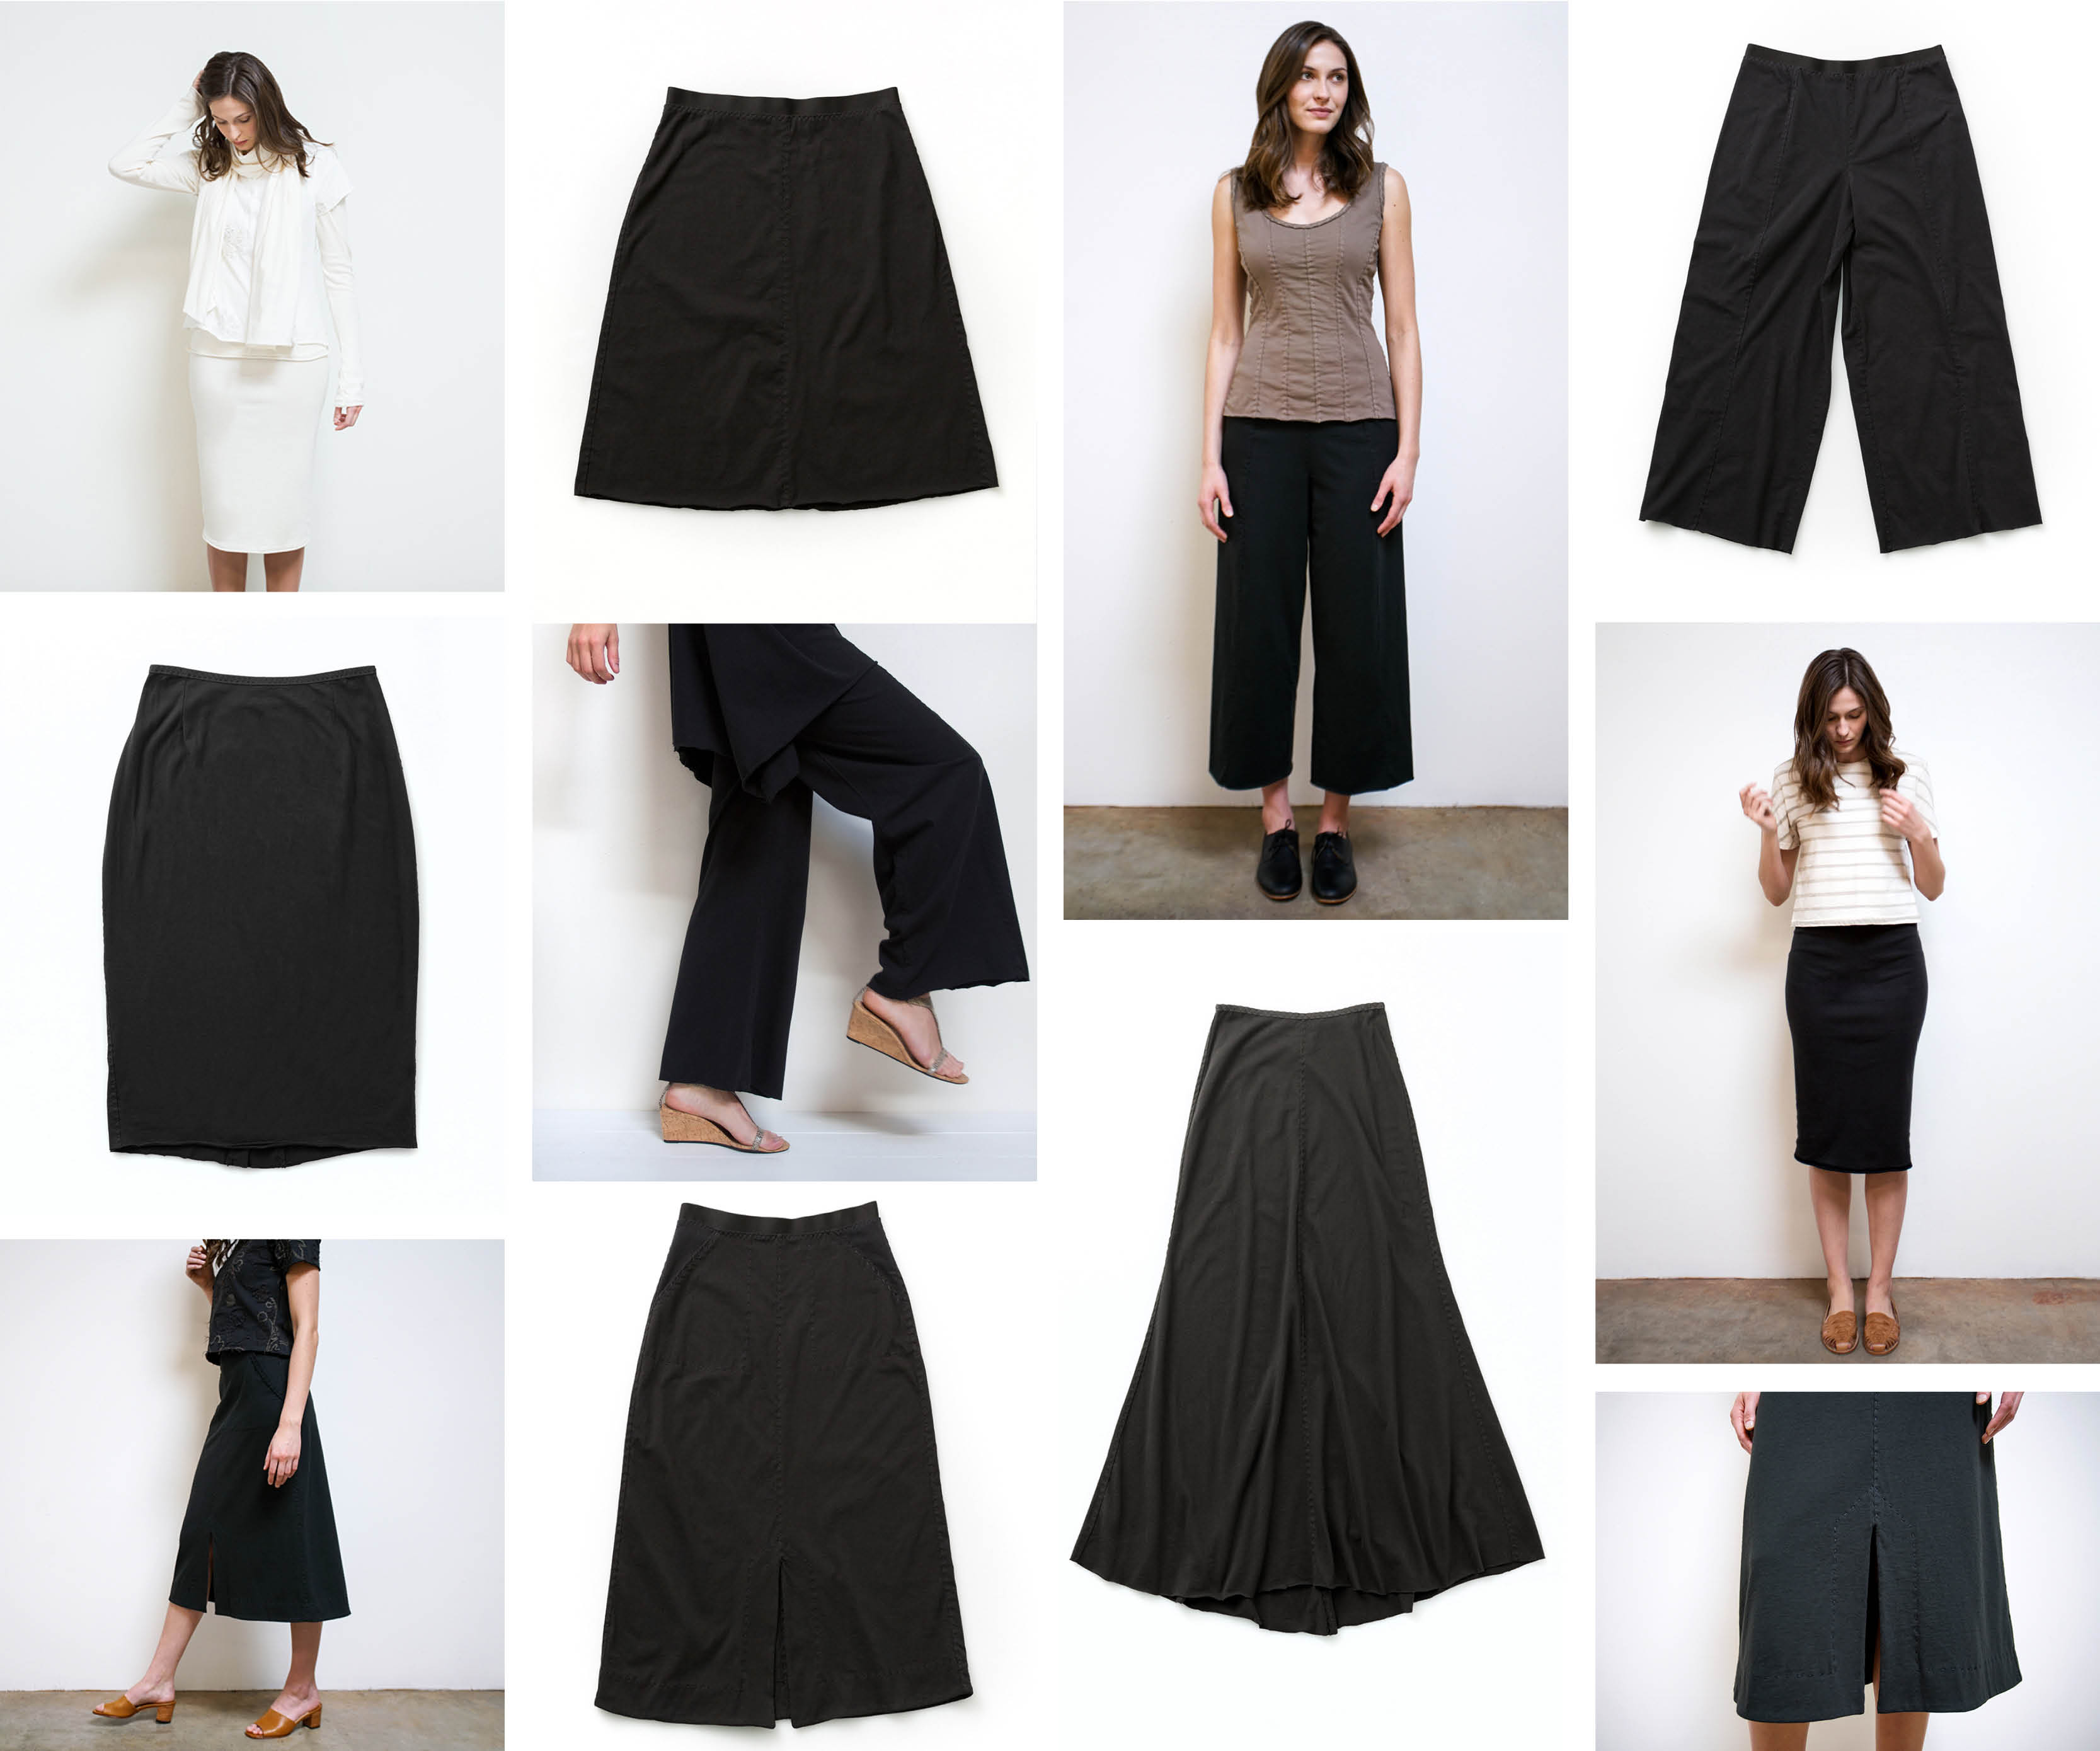 ALABAMA CHANIN - KNOW YOUR BASICS - PANTS SKIRTS DRESSES 1